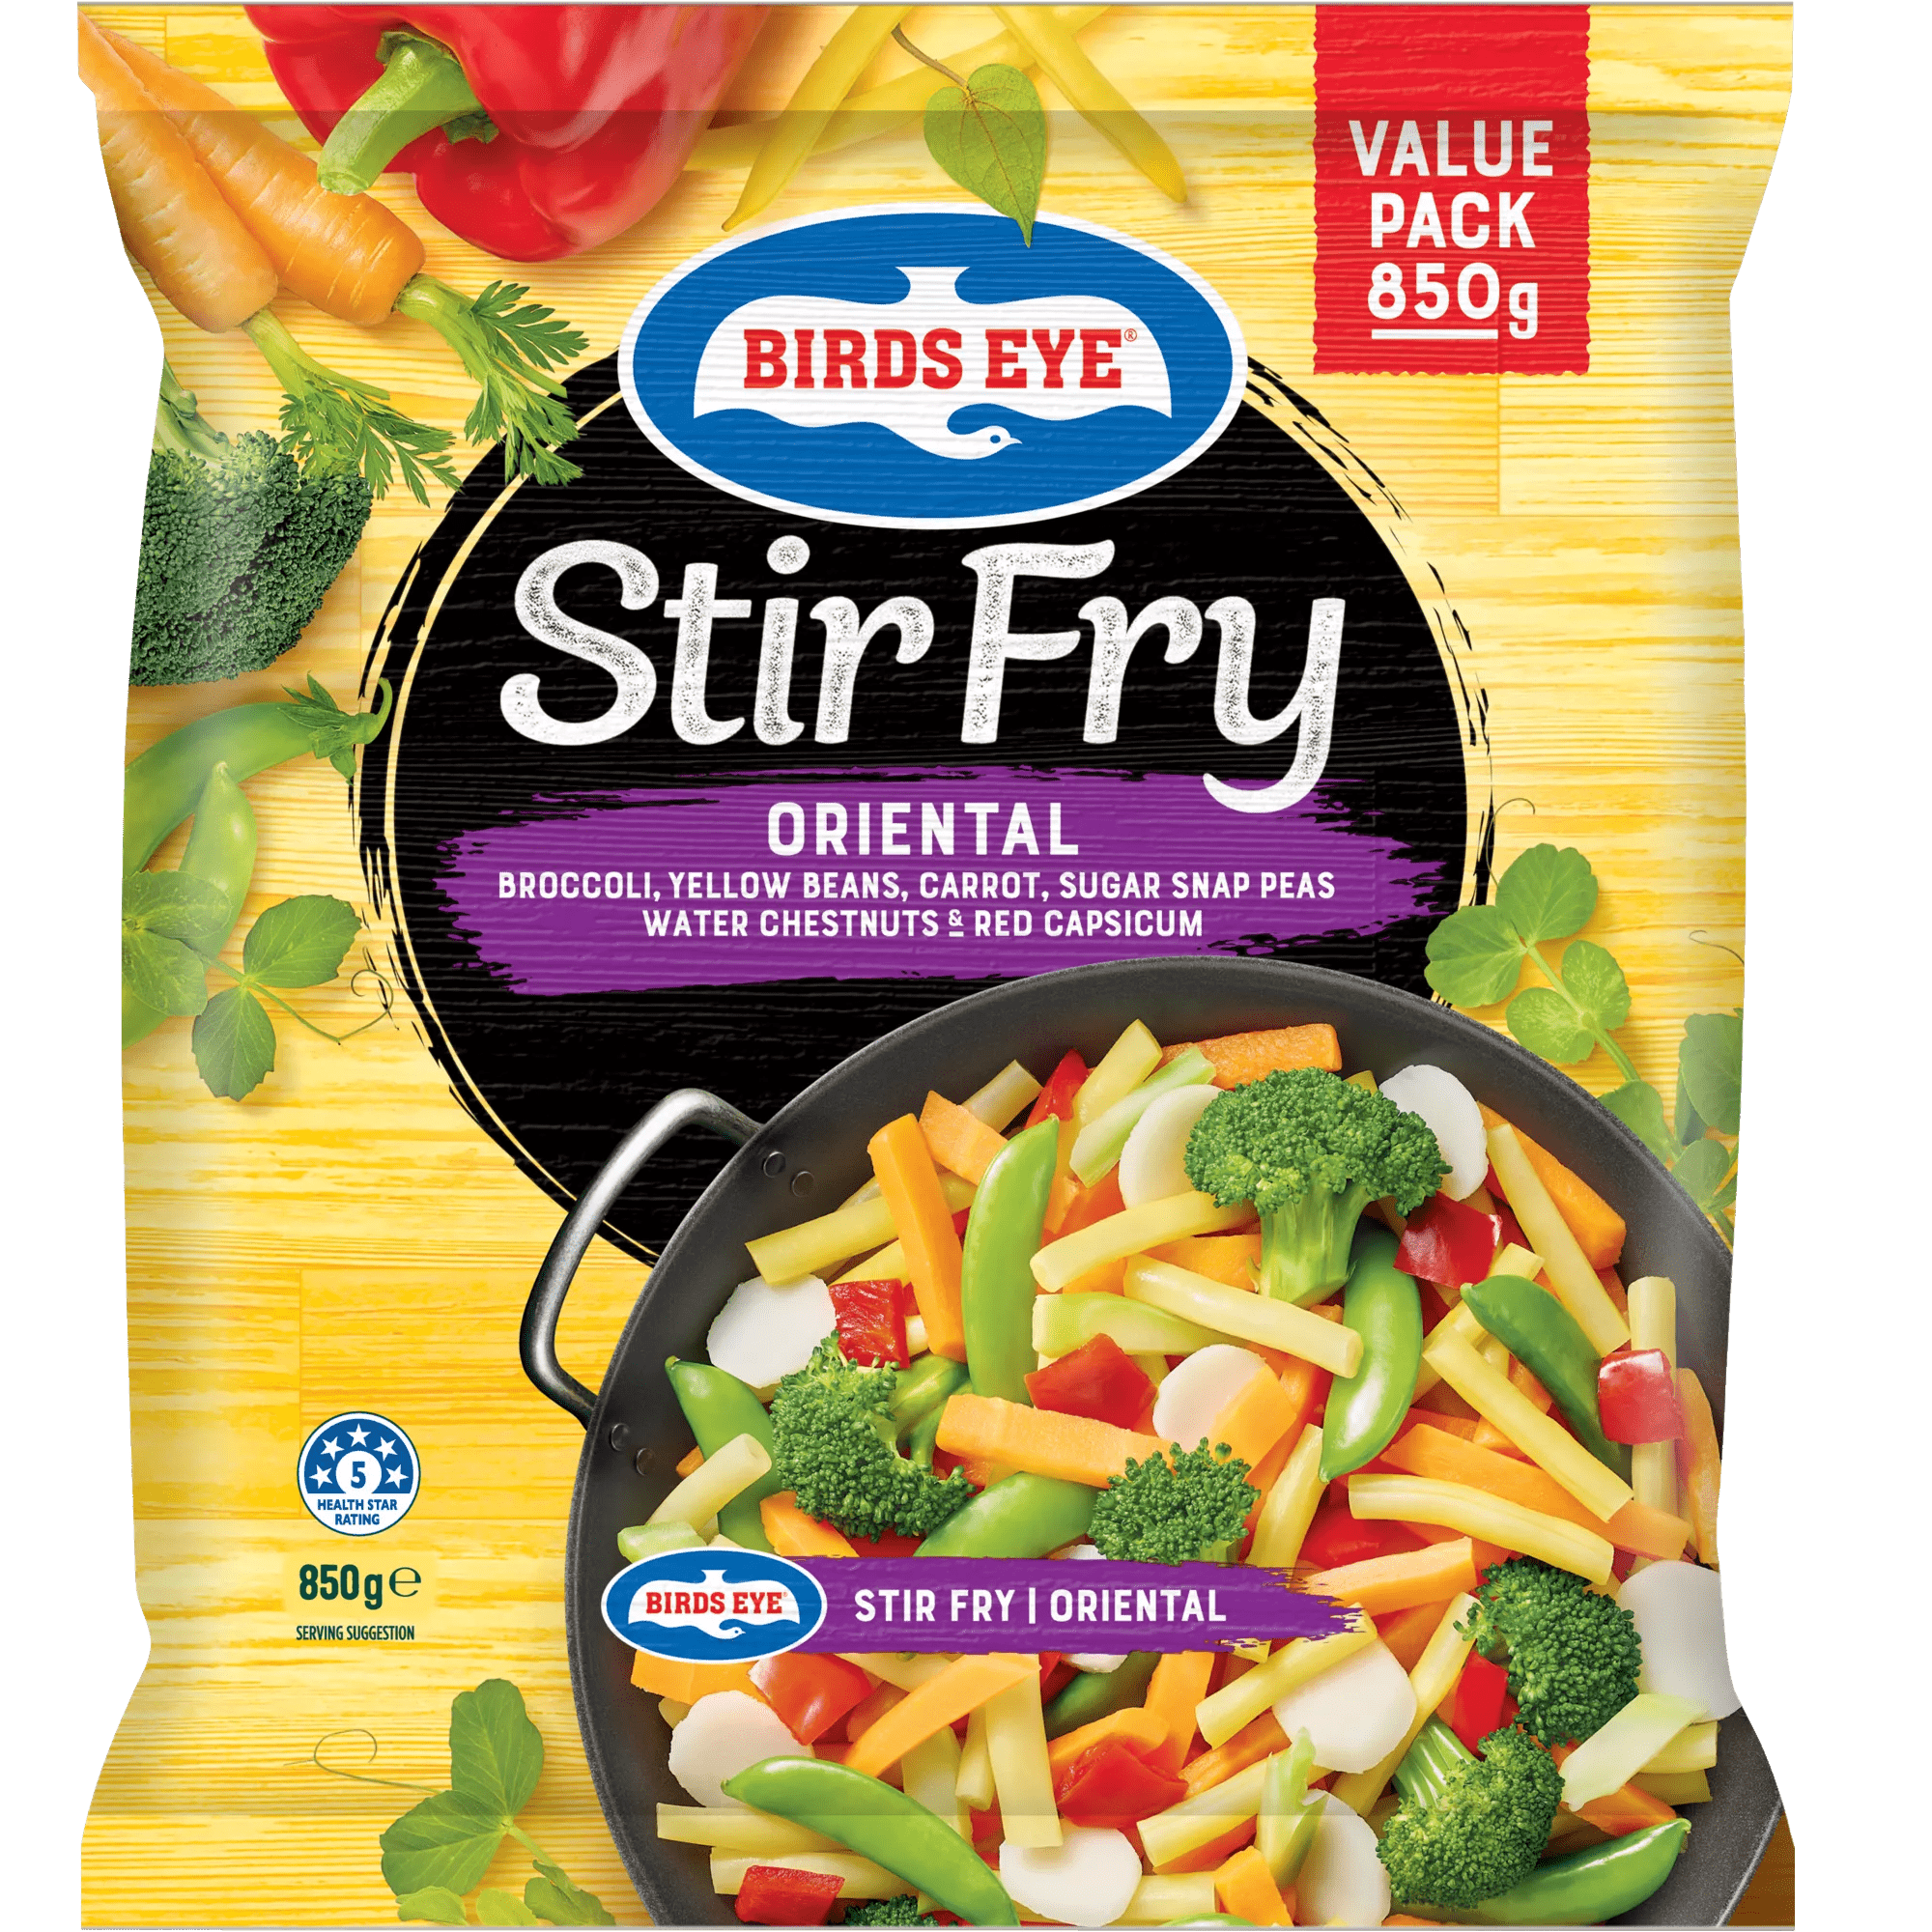 Birds Eye Oriental Stir Fry Frozen Vegetable Value Pack 850g | Birdseye